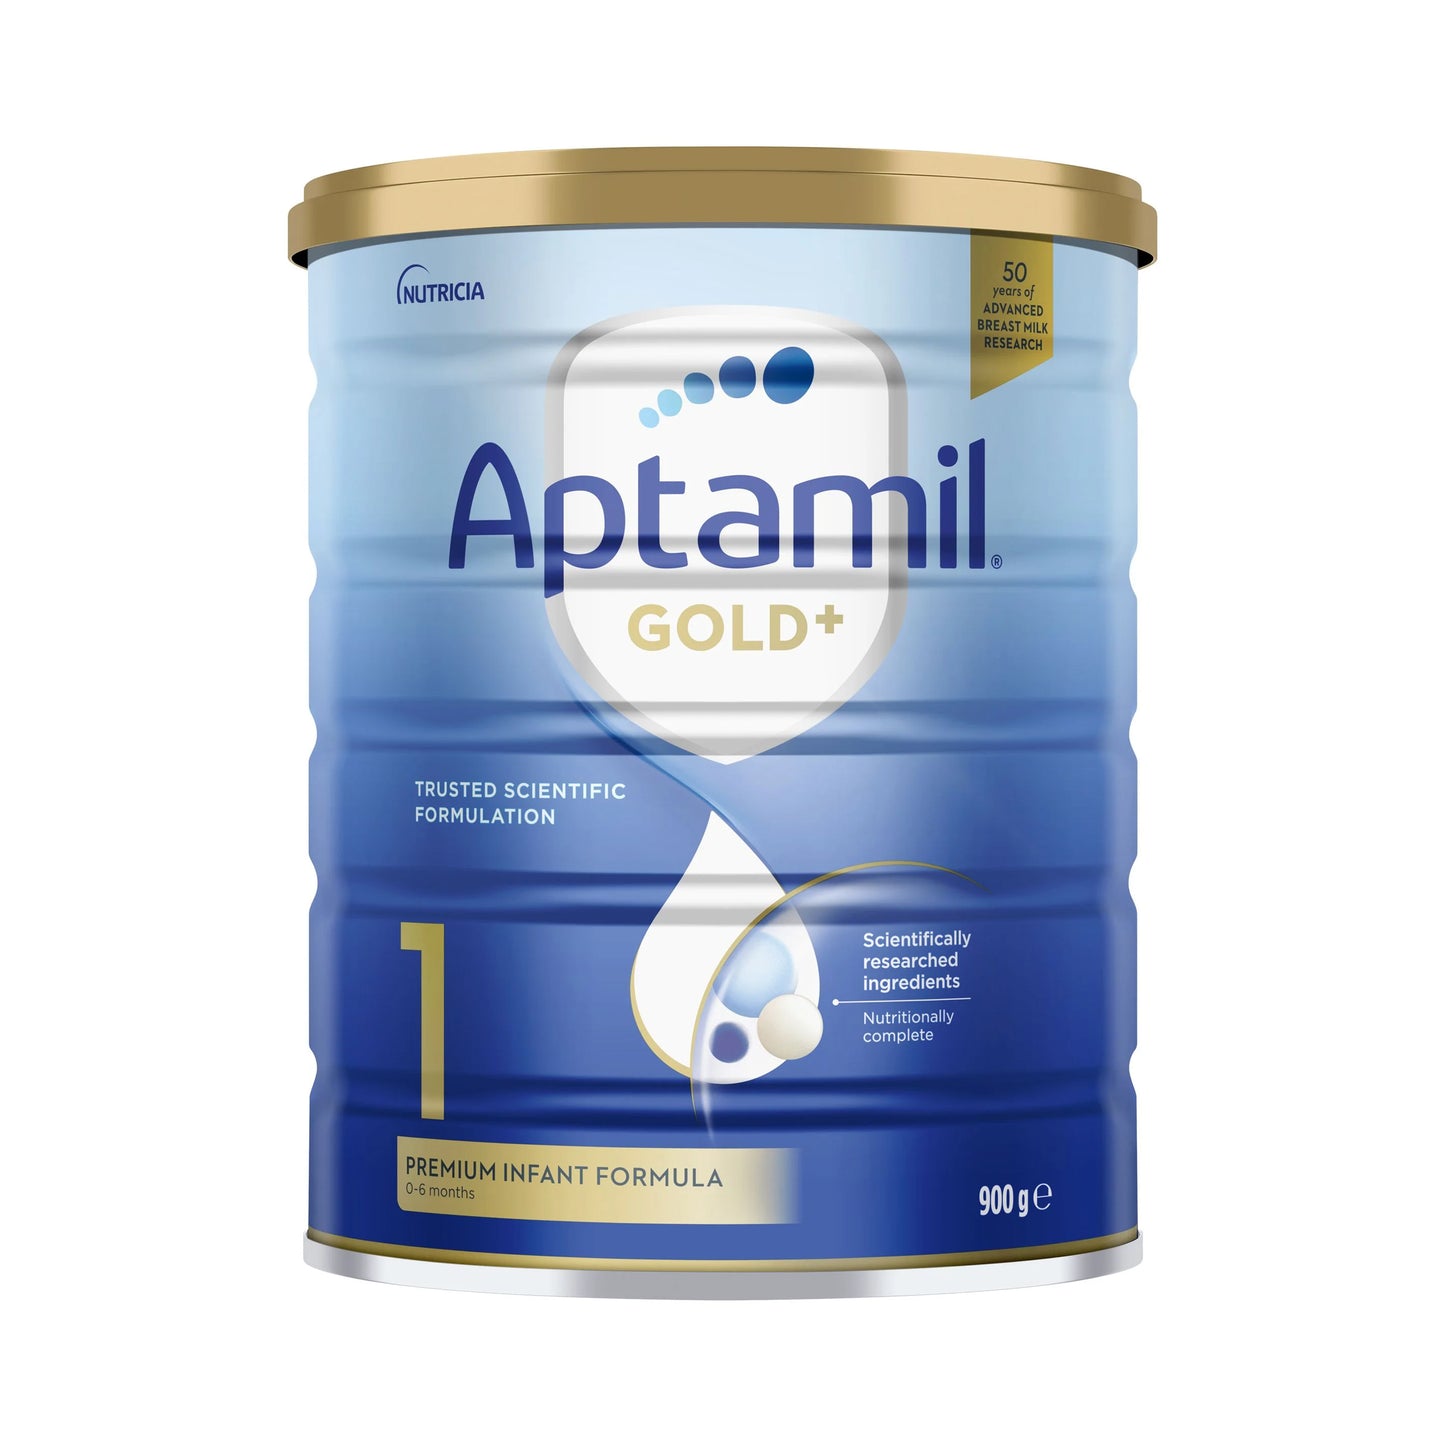 Nutricia Aptamil Gold+ 1 Premium Infant Formula 0-6 Months 900g